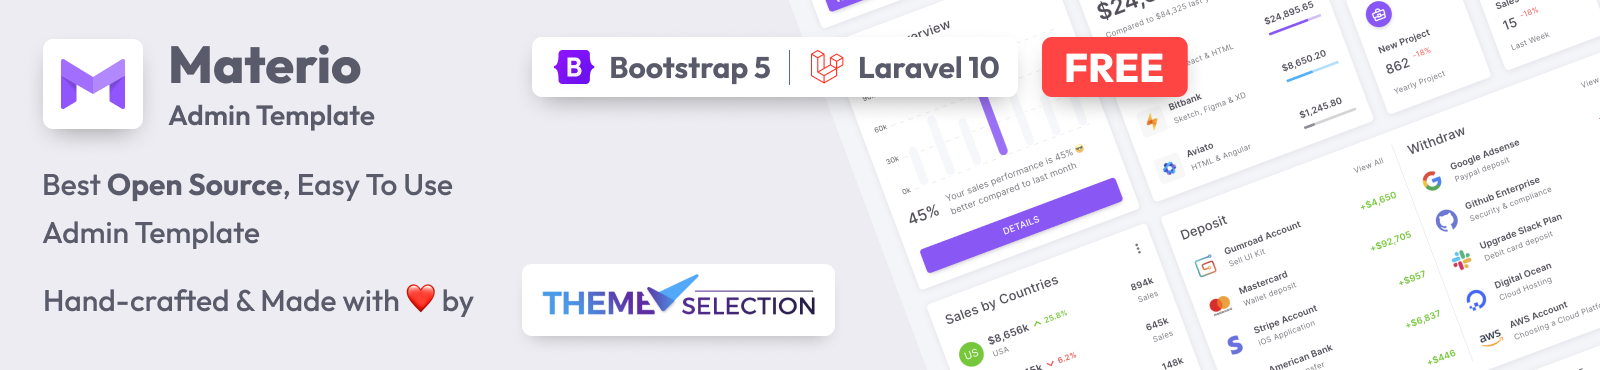 materio free bootstrap 5 laravel admin template